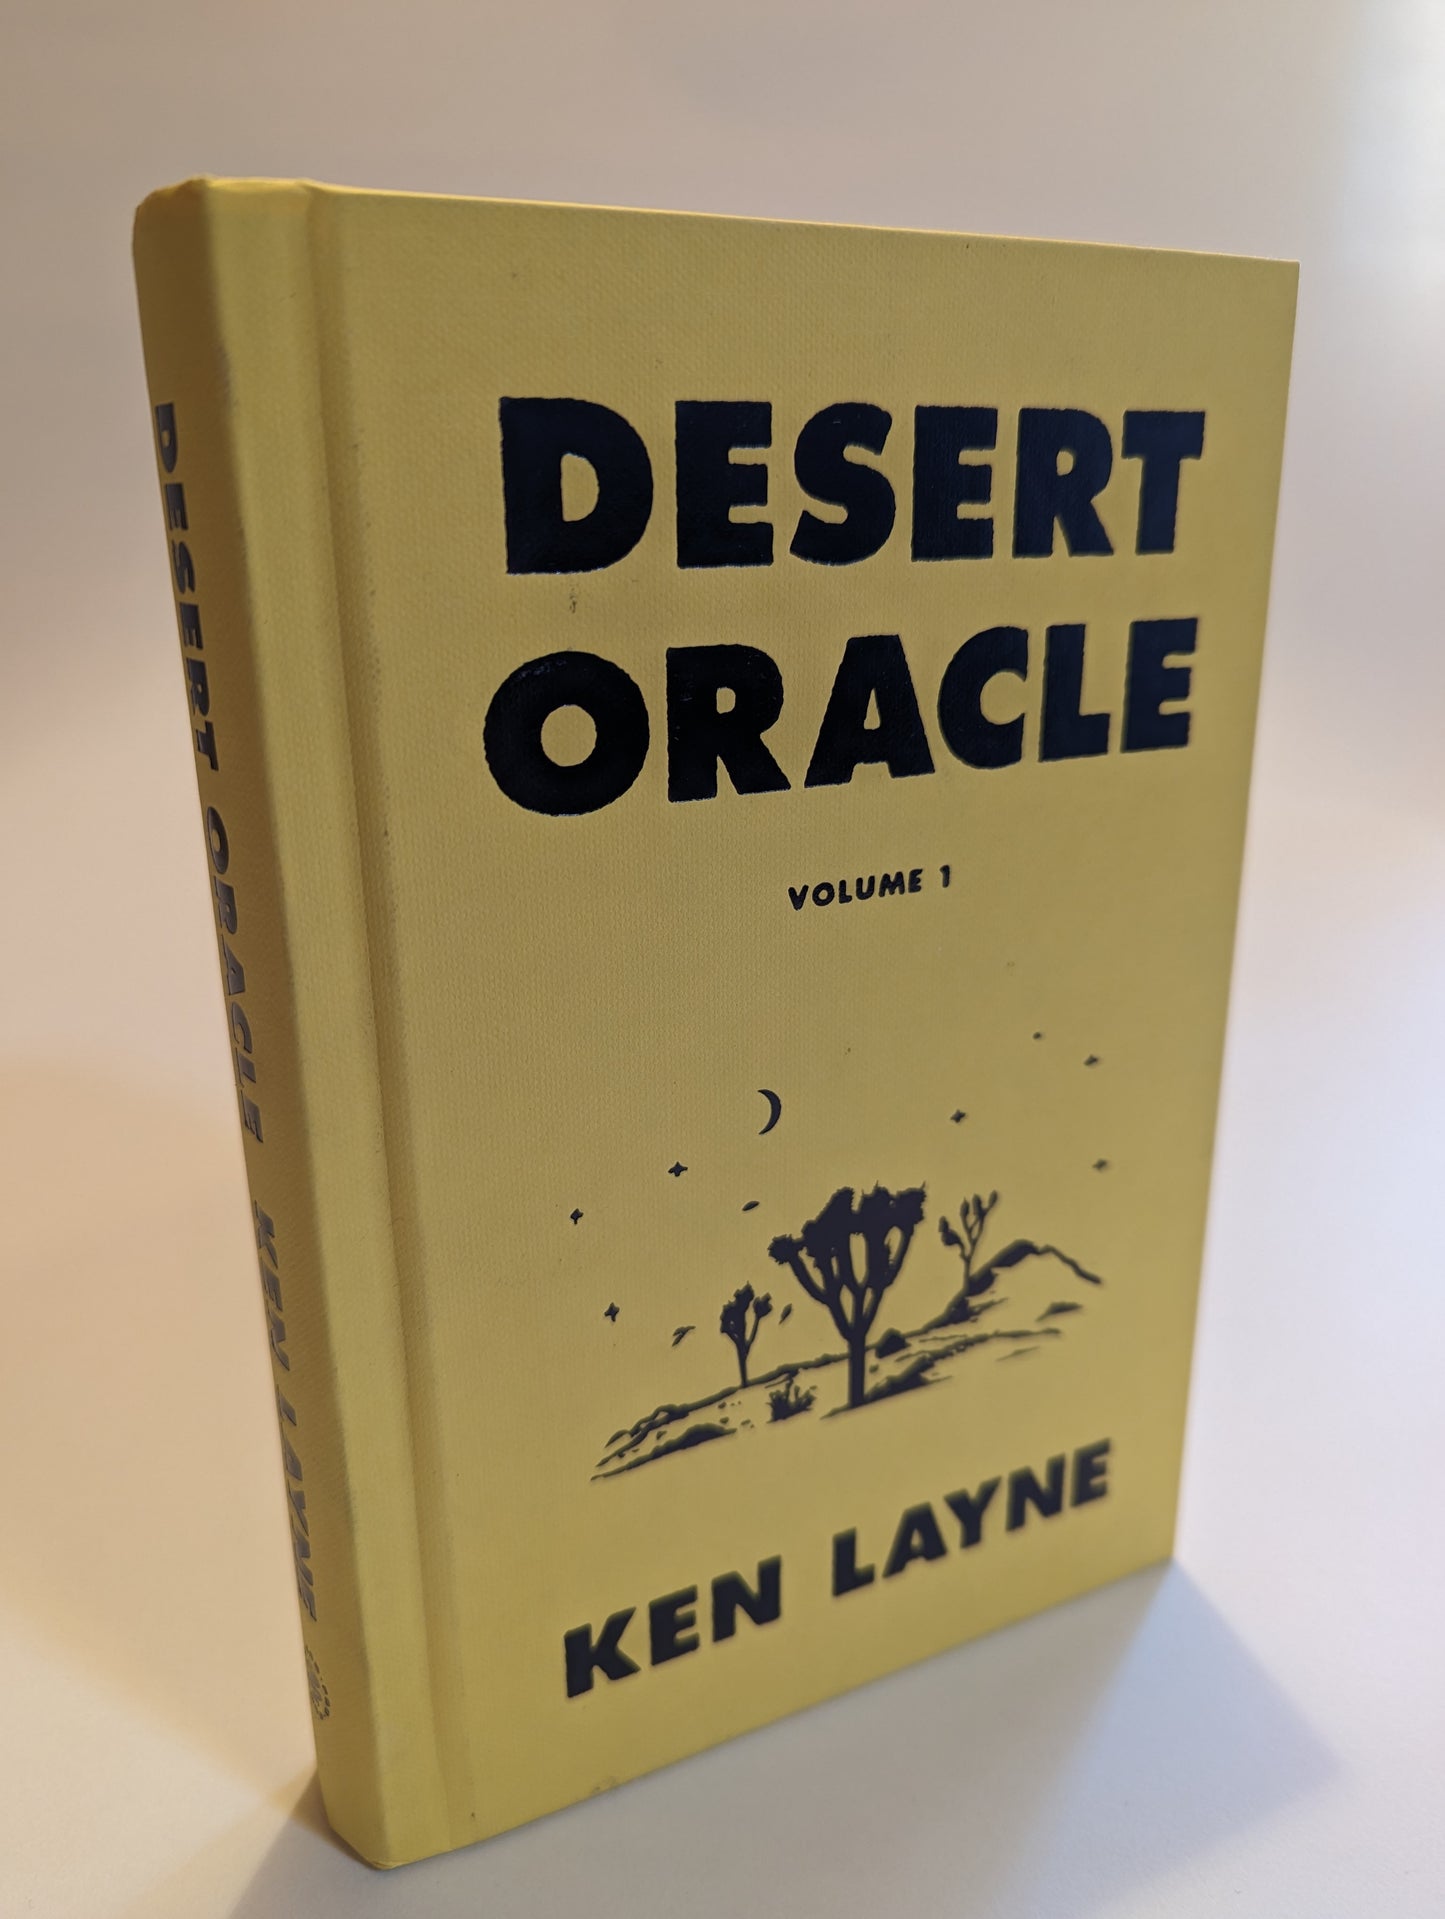 Desert Oracle Volume 1: Strange True Tales from the American Southwest [Ken Layne]